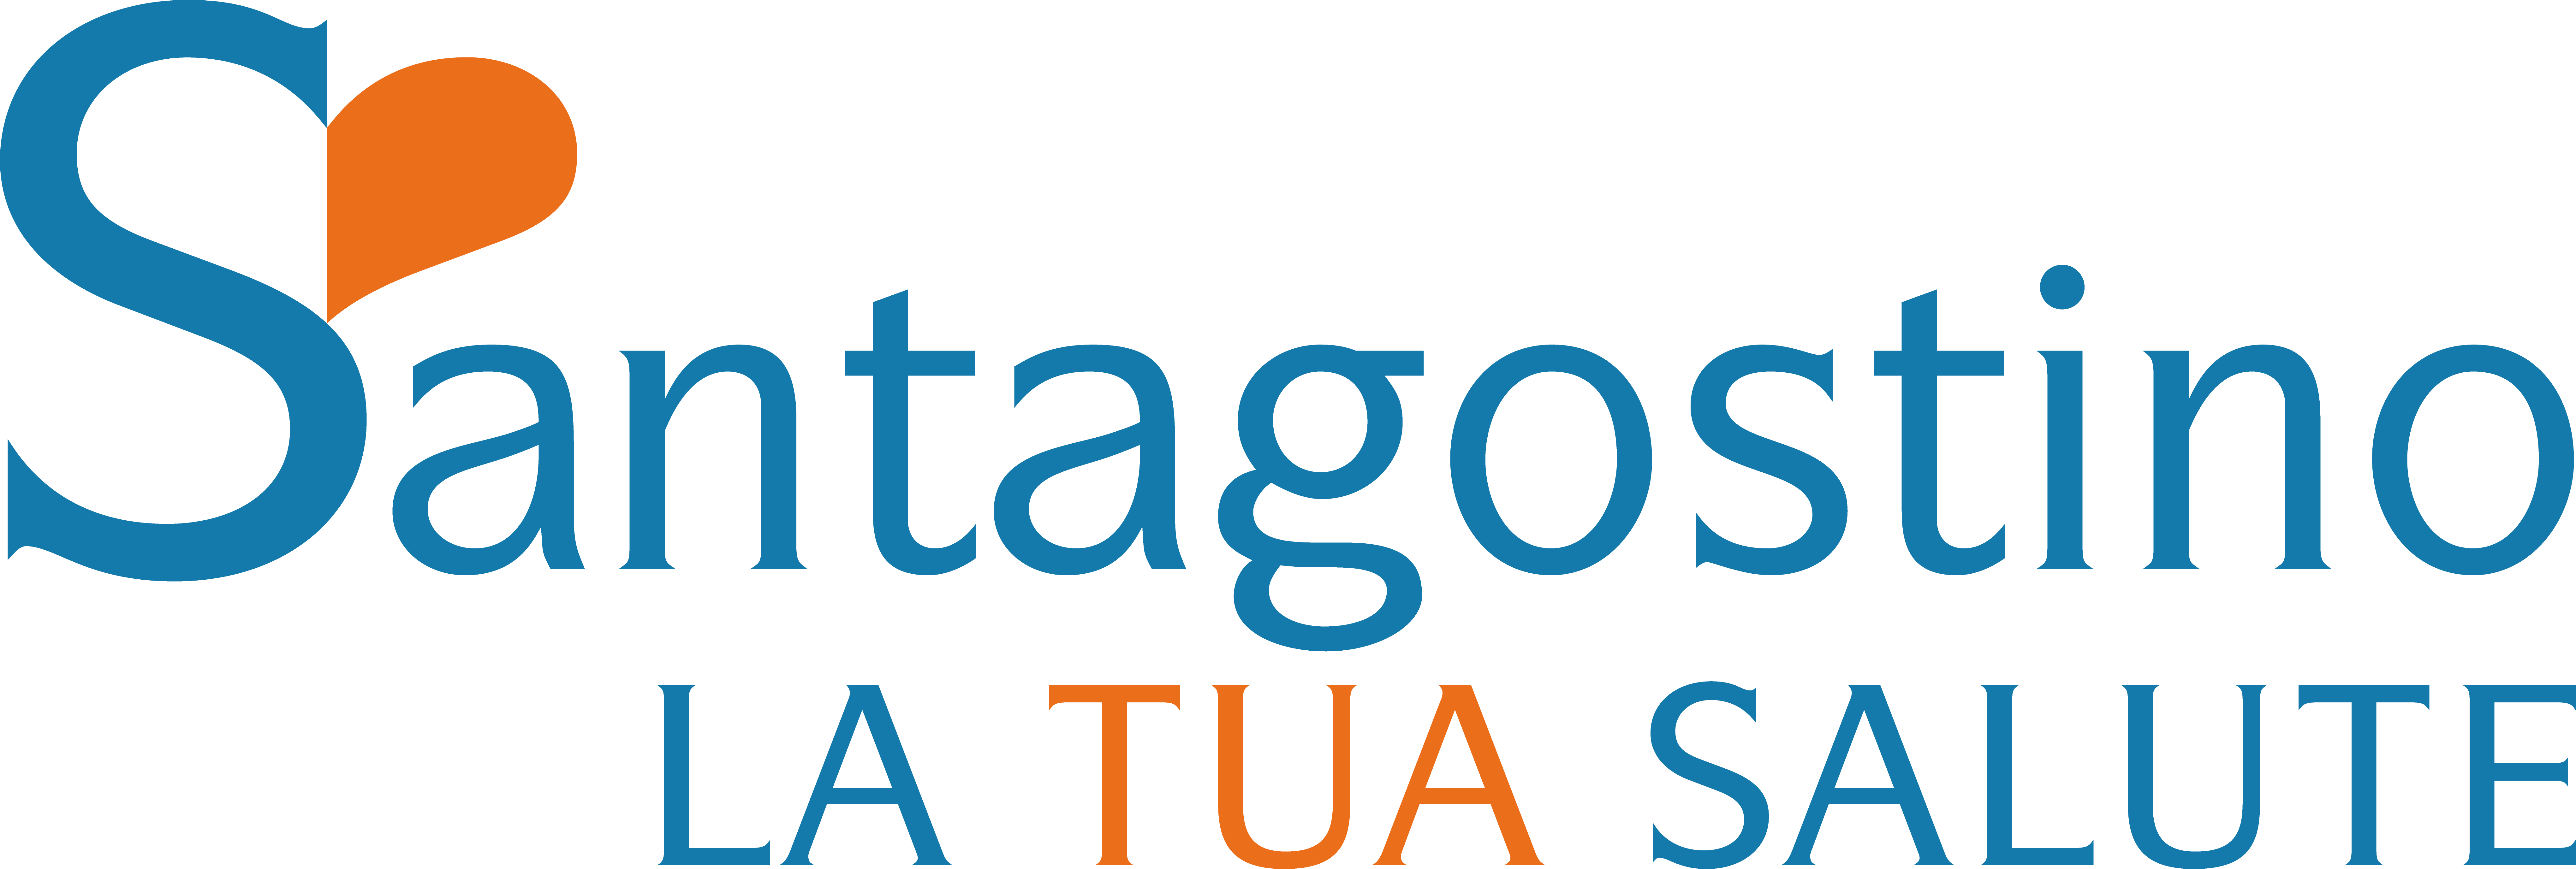 Santagostino logo